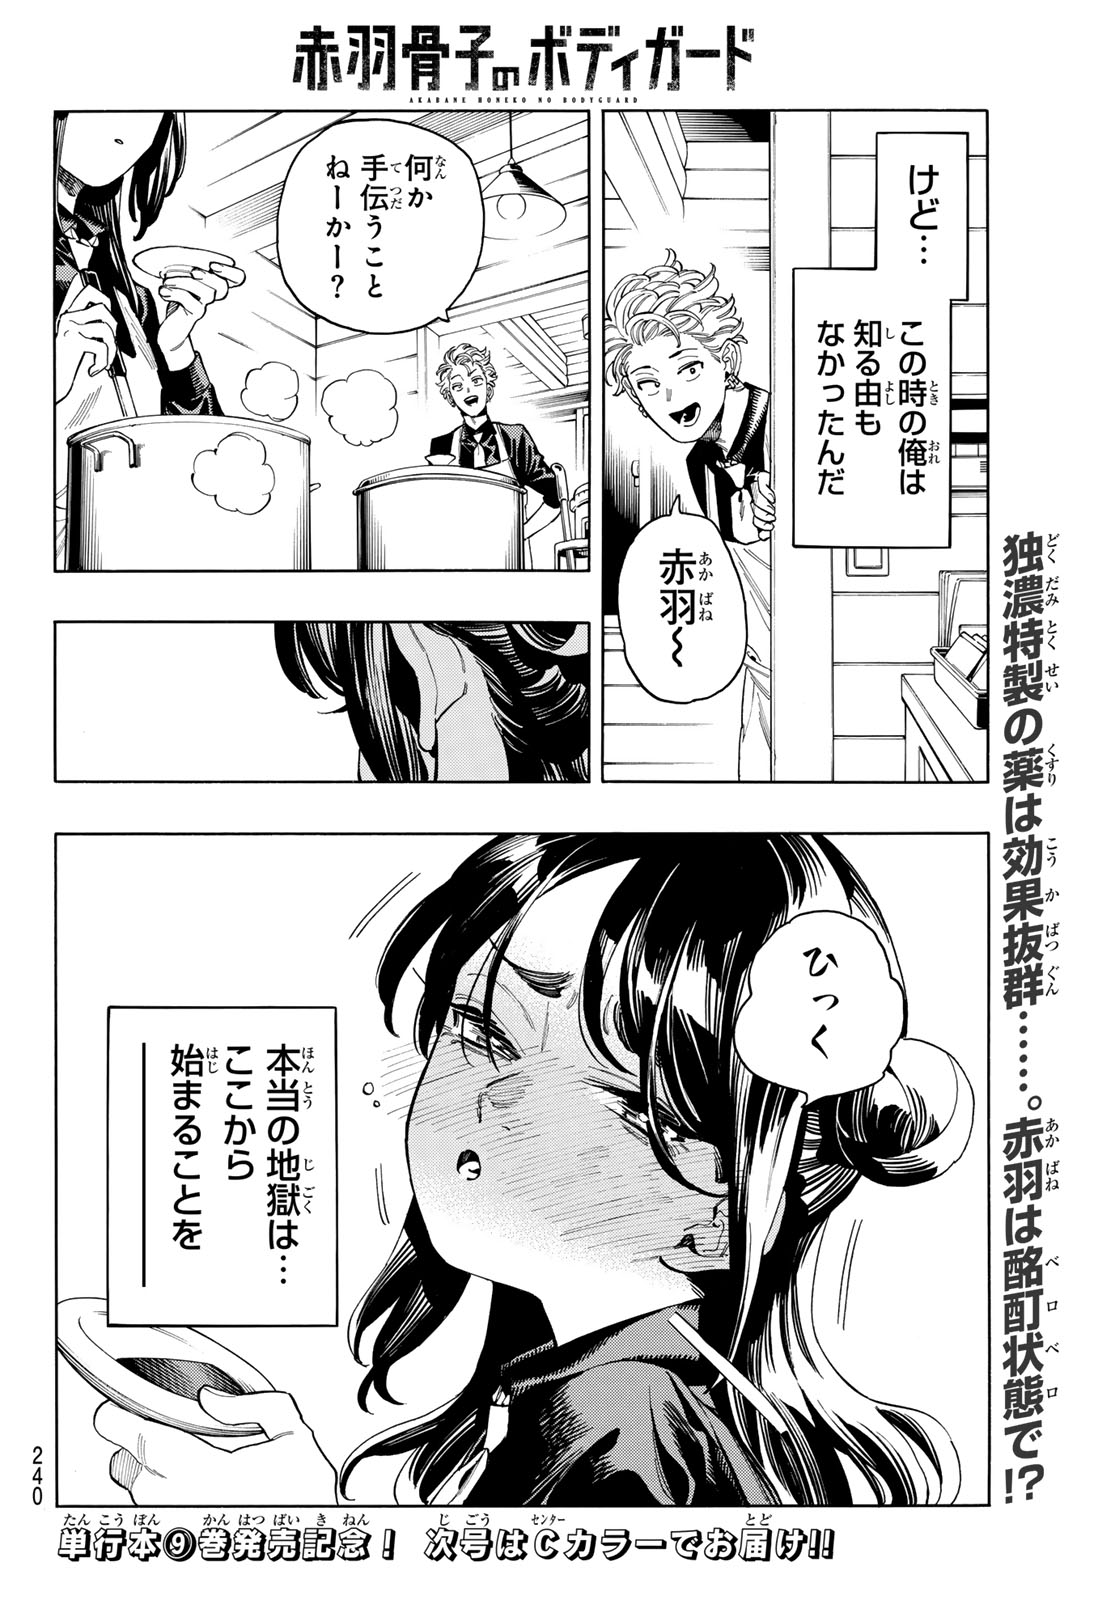 Akabane Honeko no Bodyguard - Chapter 86 - Page 20